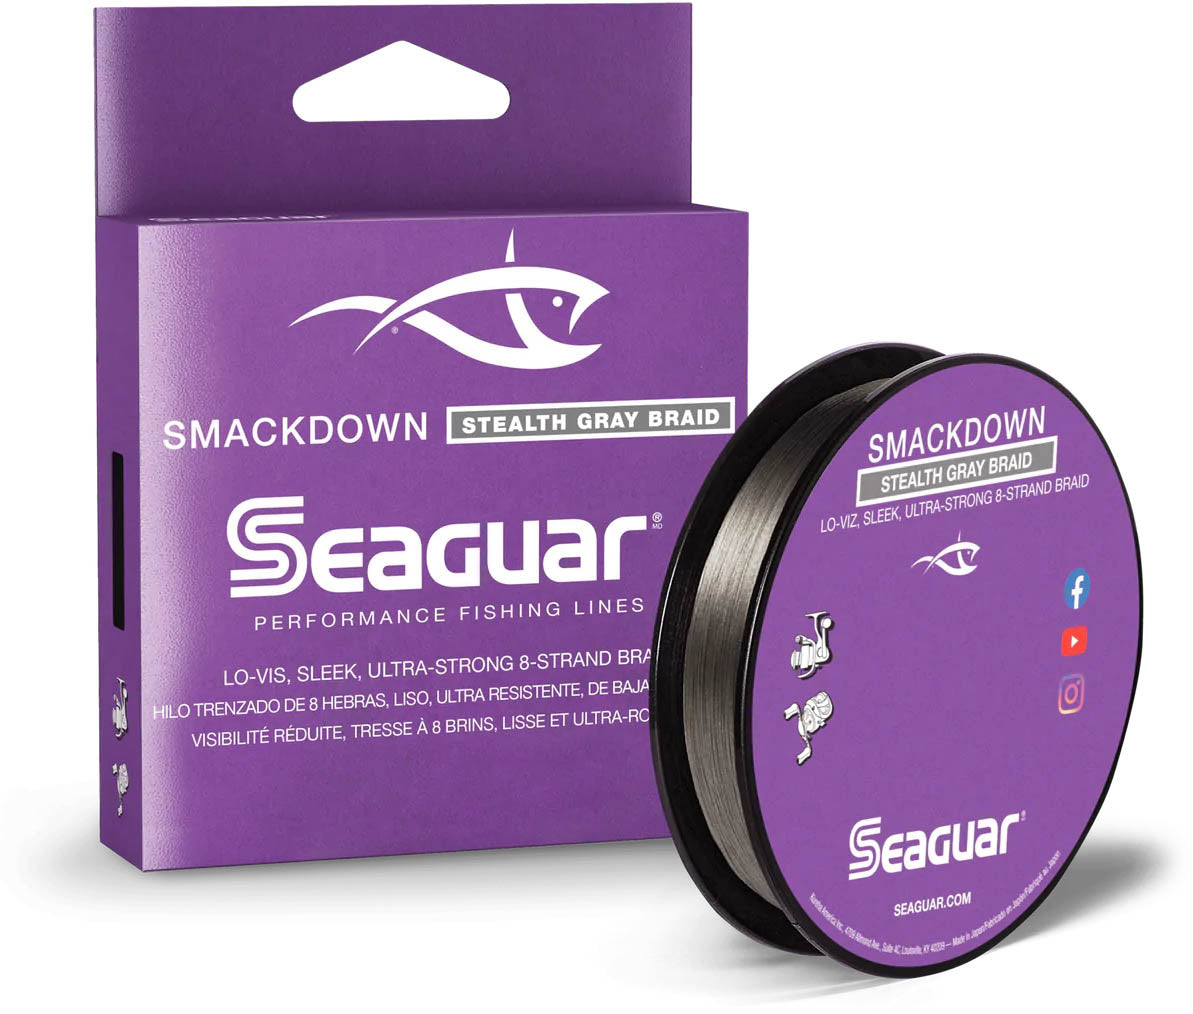 Seaguar Smackdown Braid 10 lb / Stealth Gray